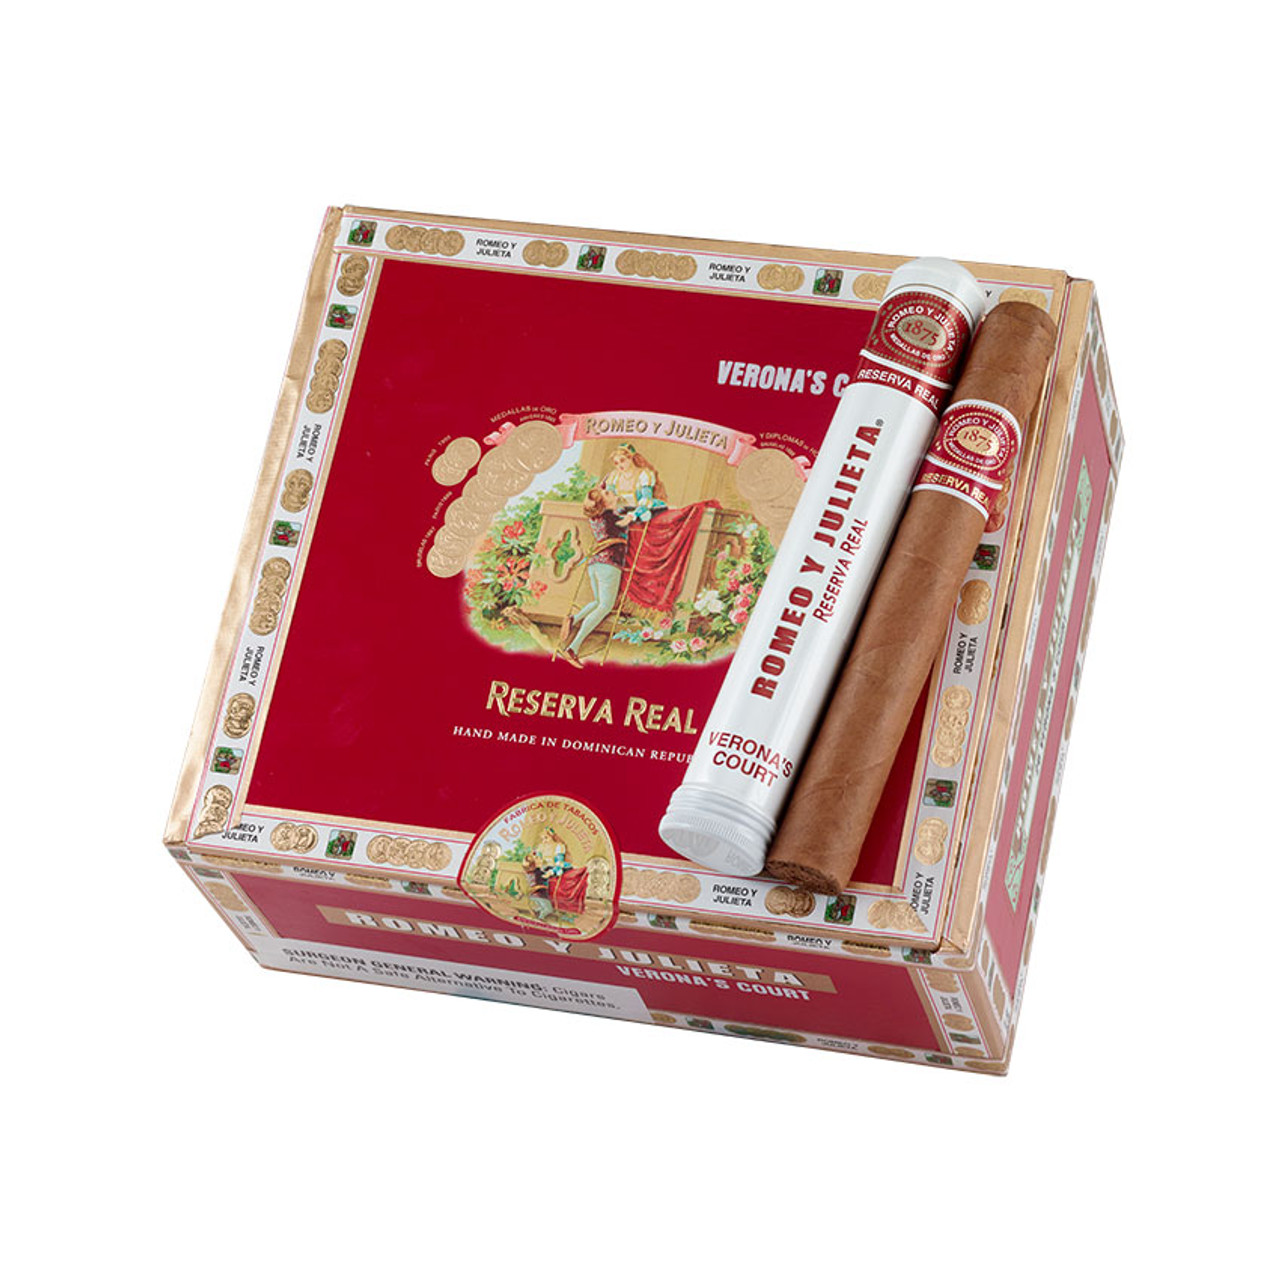 Romeo y Julieta Reserva Real Rothchilde Tubo Cigars - 5 x 52 (Box of 20 Aluminum Tubes) *Box